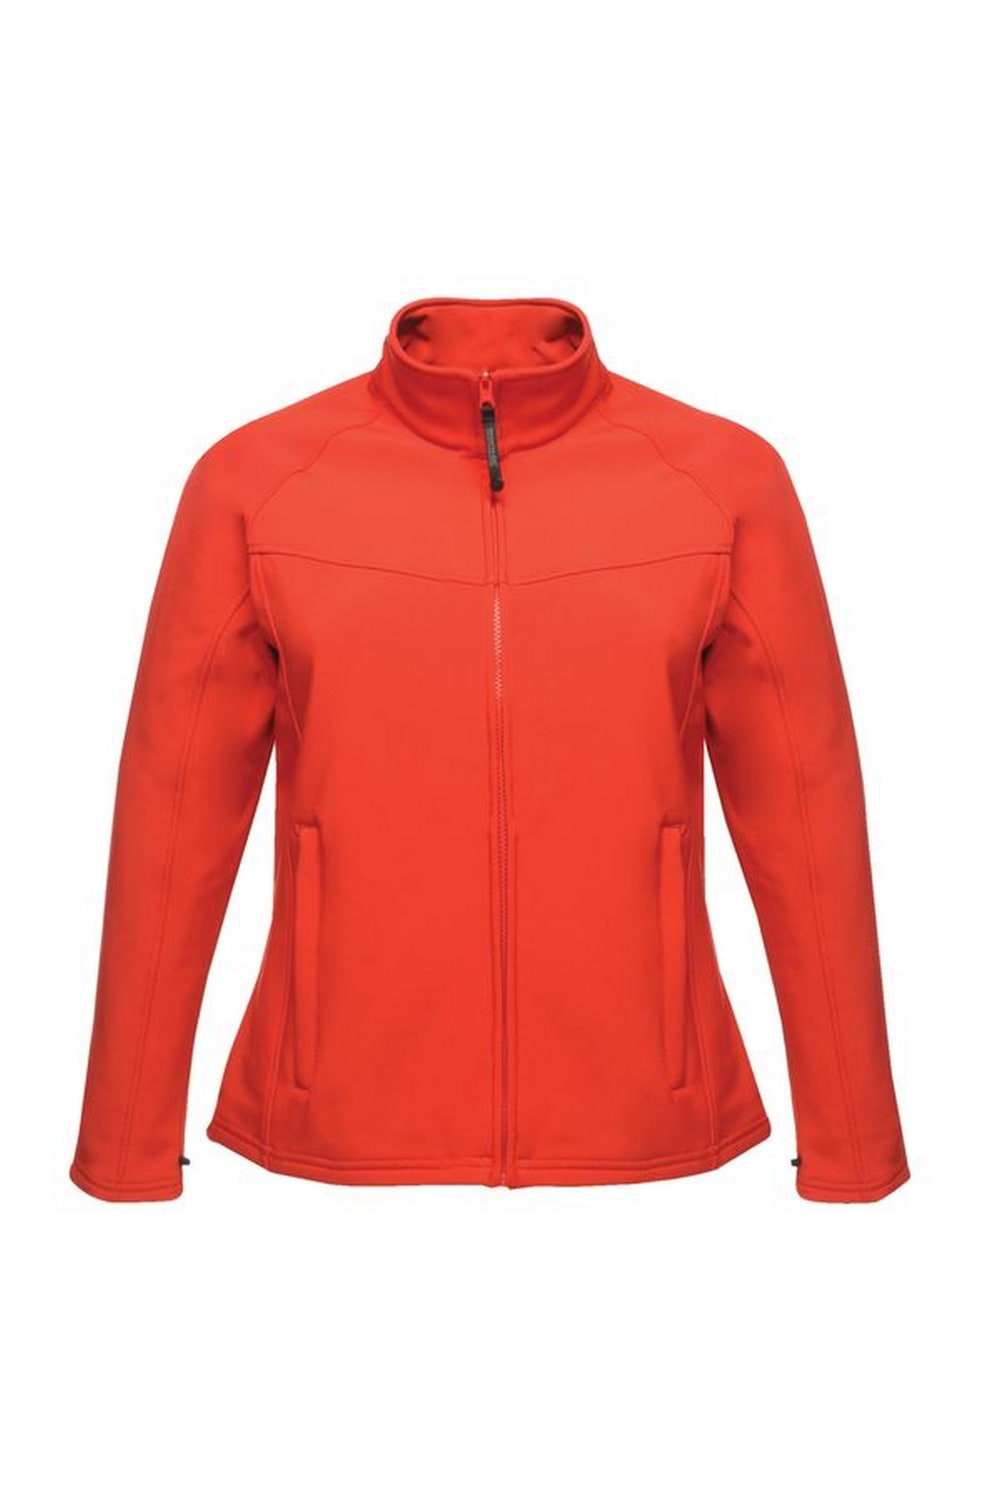 Regatta Ladies Uproar Softshell Wind Resistant Jacket (Red)